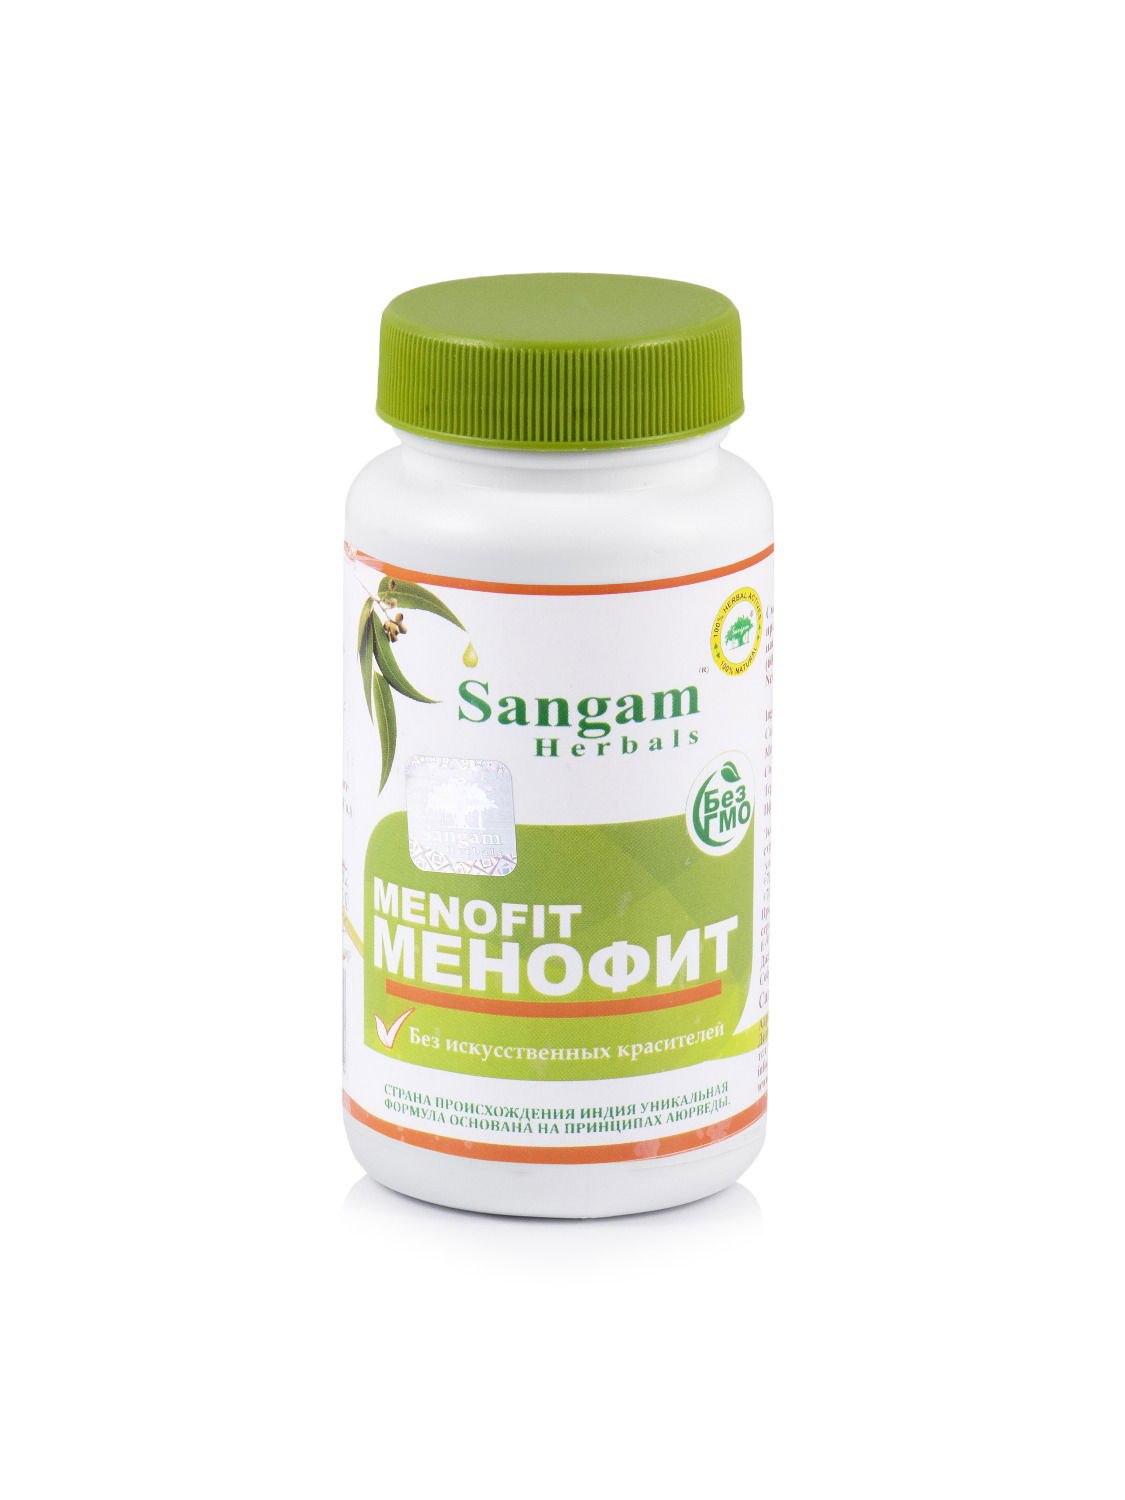 Менофит Sangam Herbals (60 таблеток). 